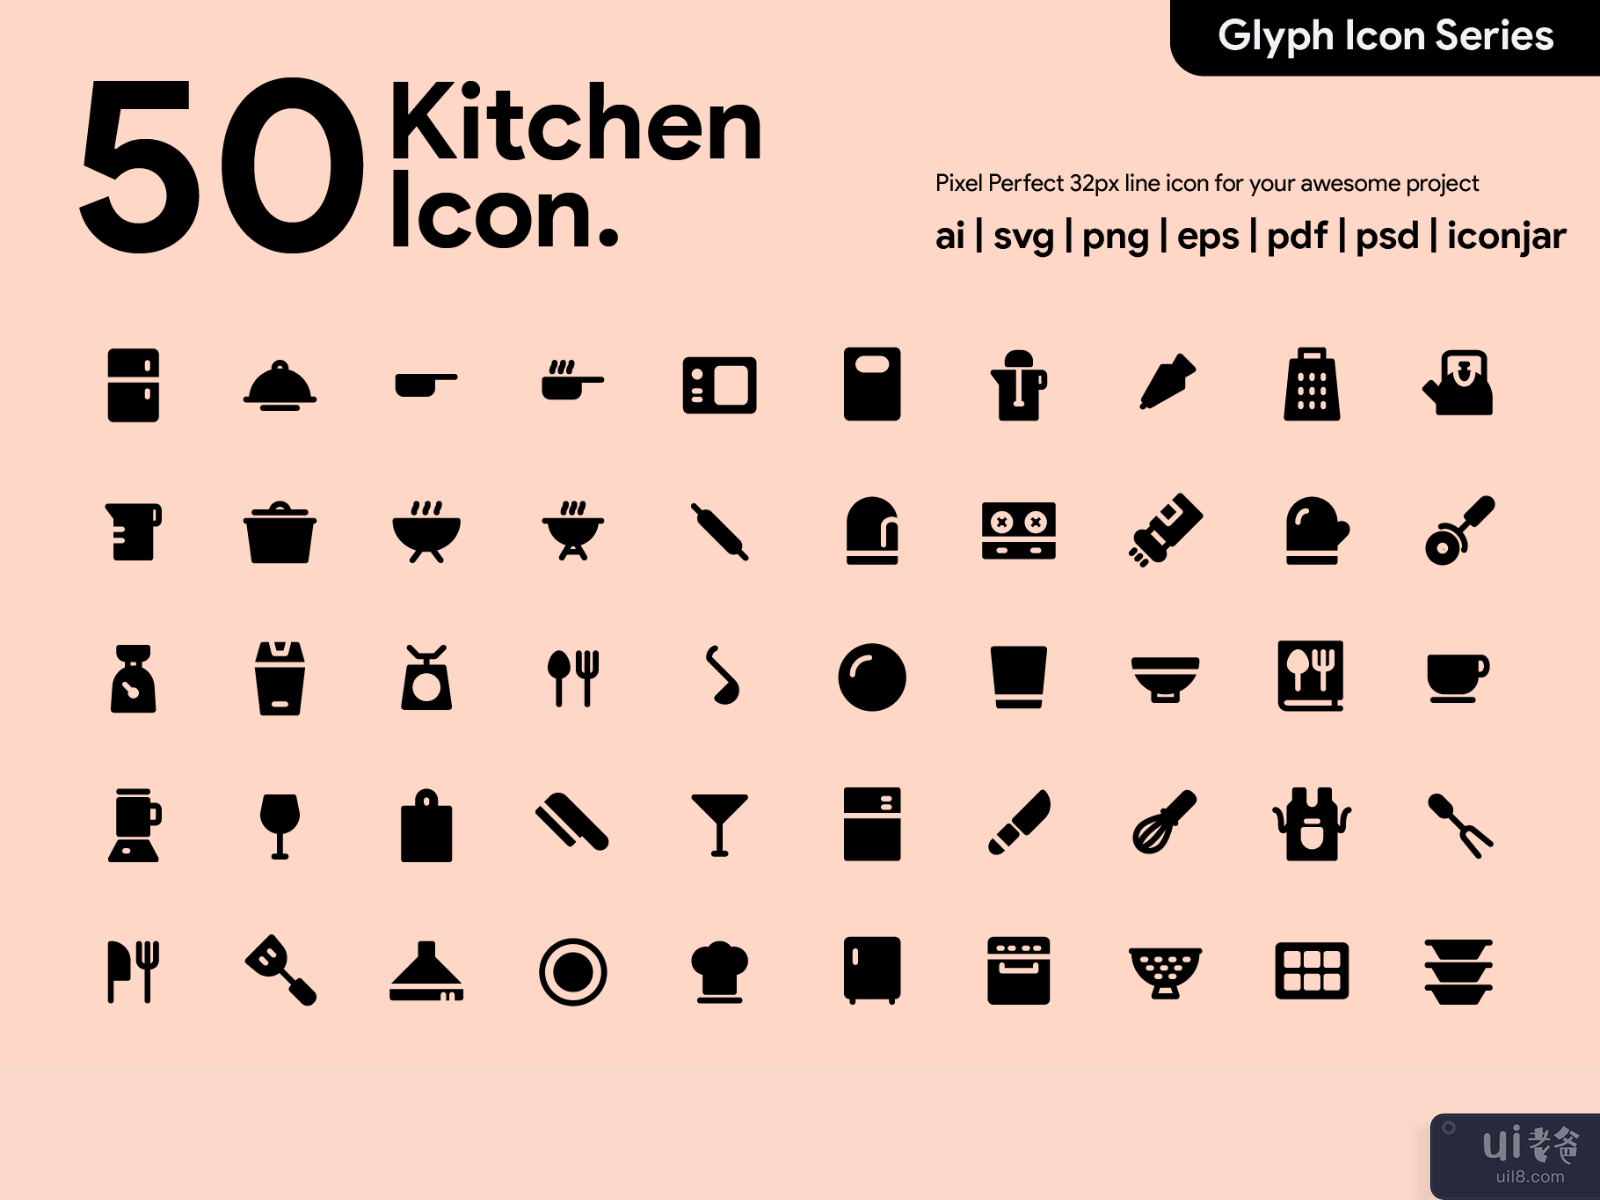 Kawaicon - 50 厨房字形图标集